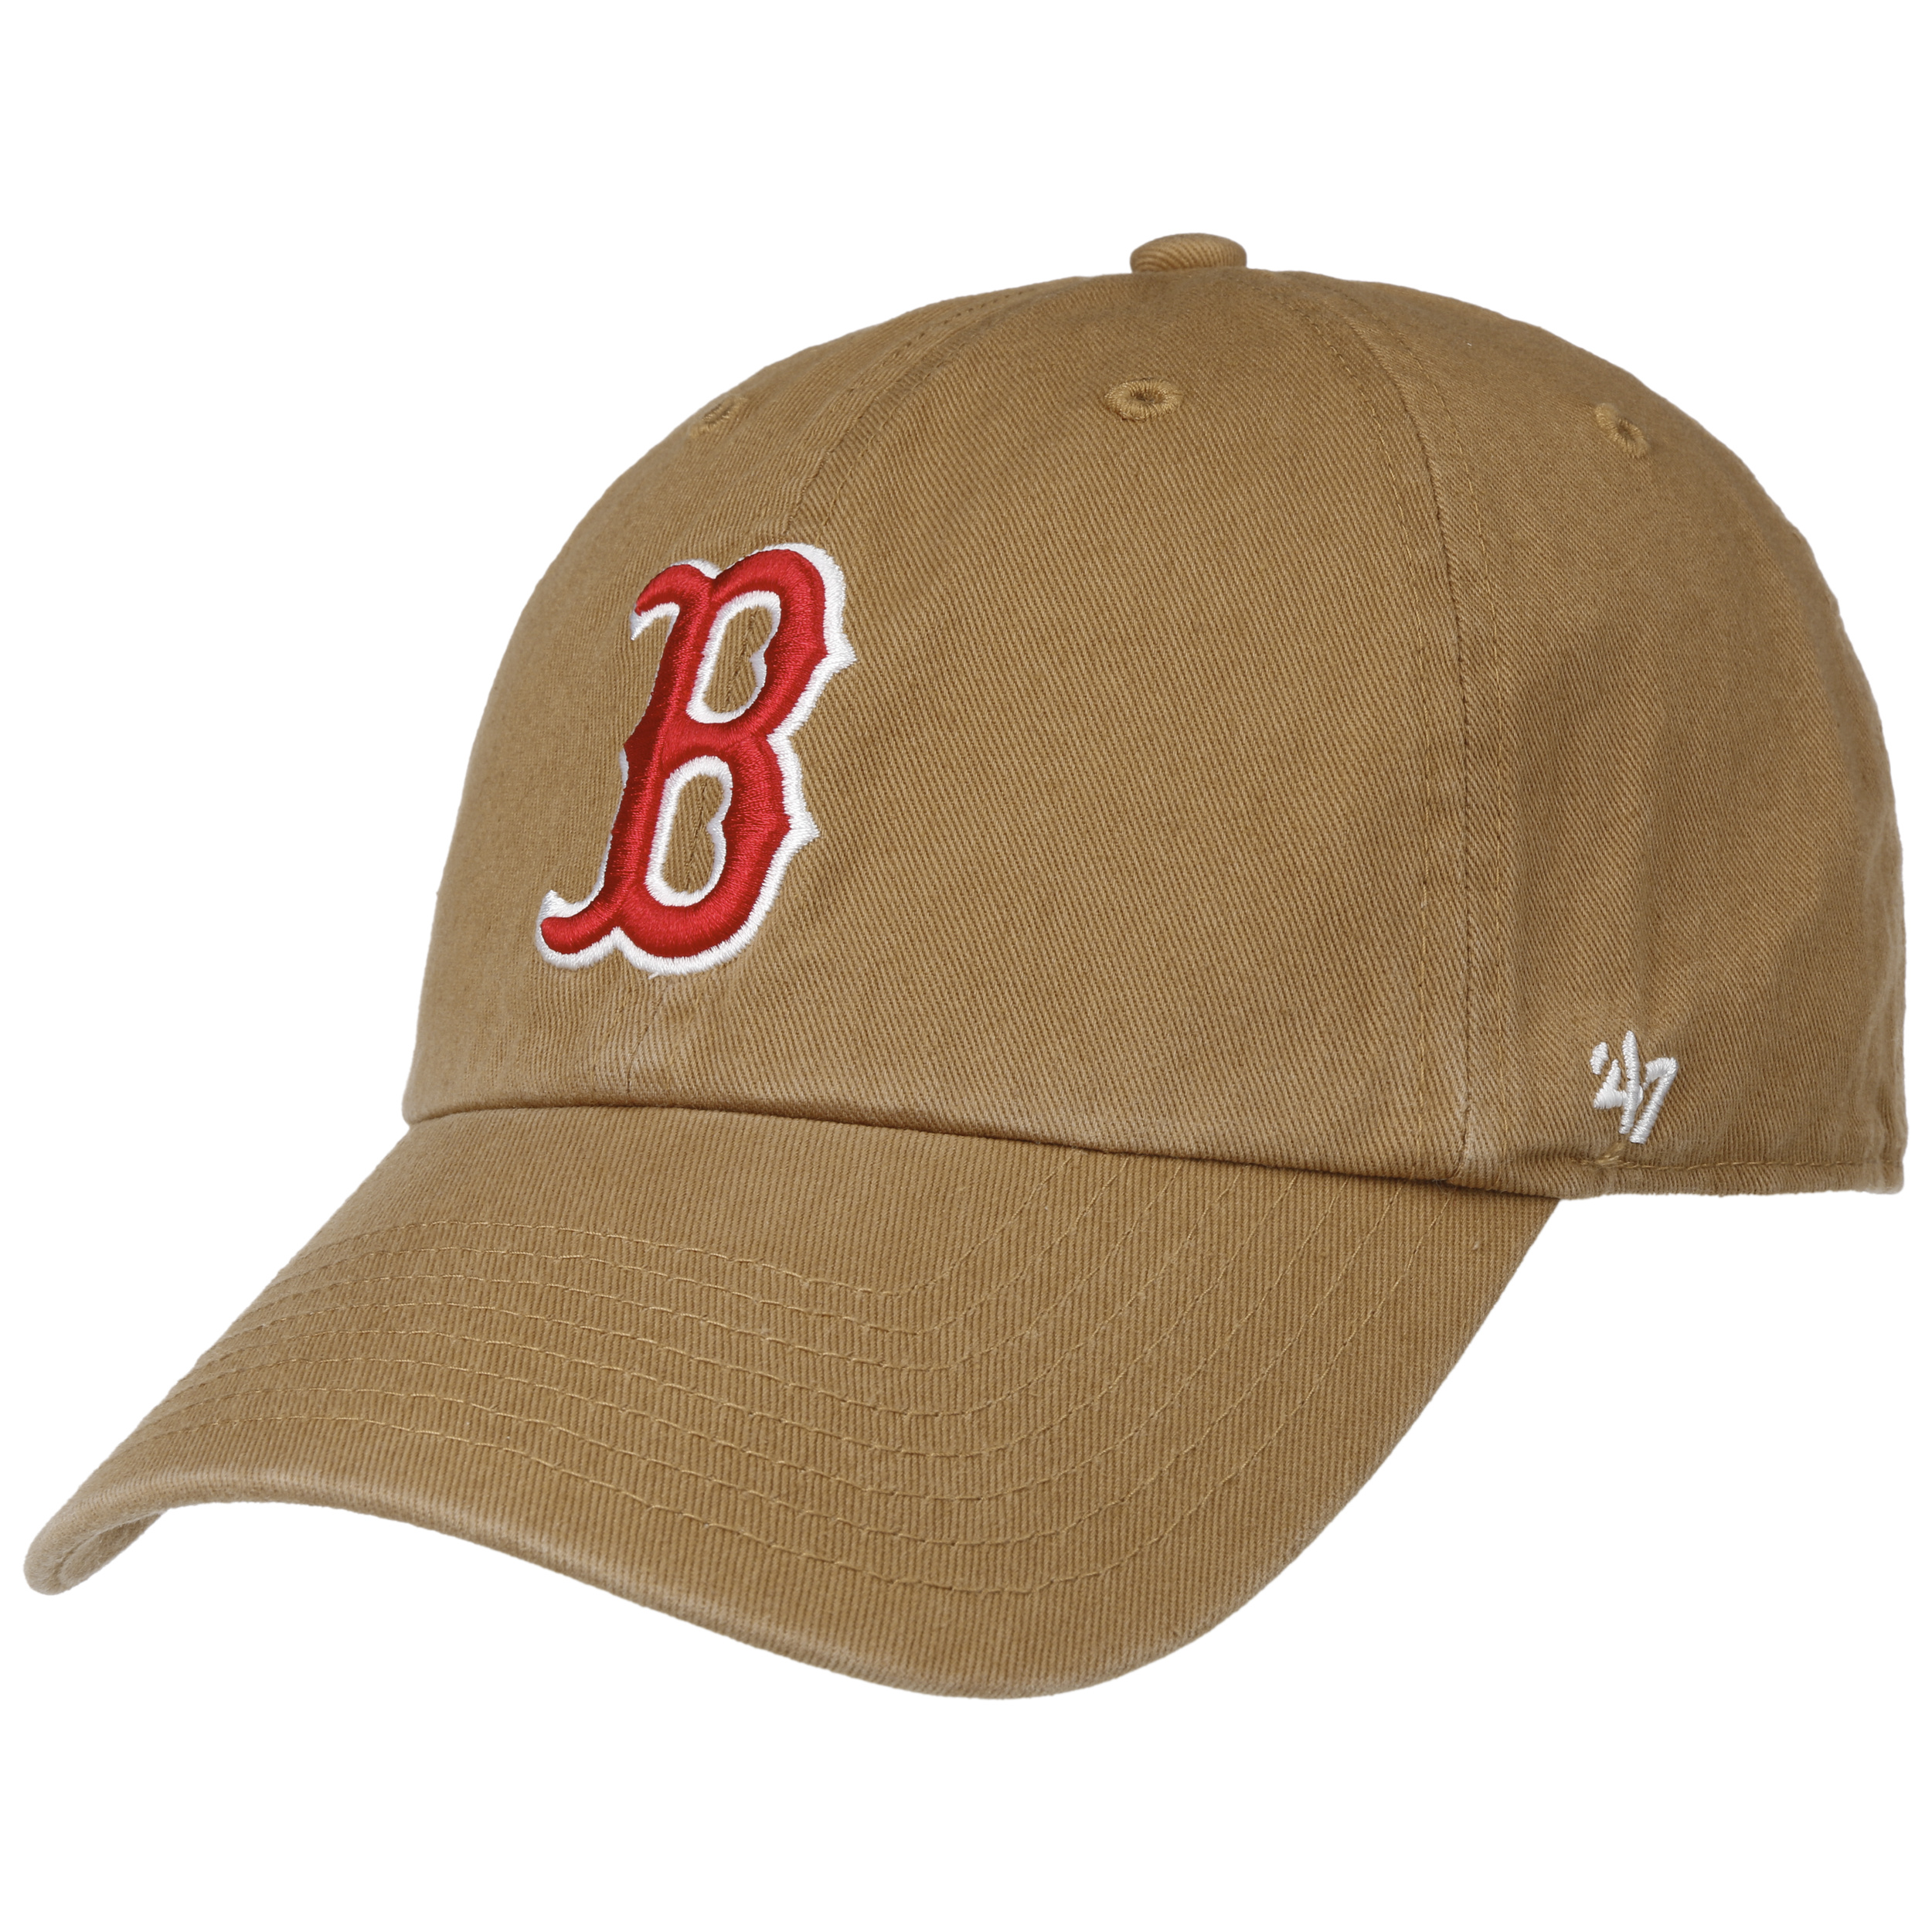 Amazoncom  47 Boston Red Sox White MLB Clean Up Cap  OneSize   Baseball Caps  Sports  Outdoors